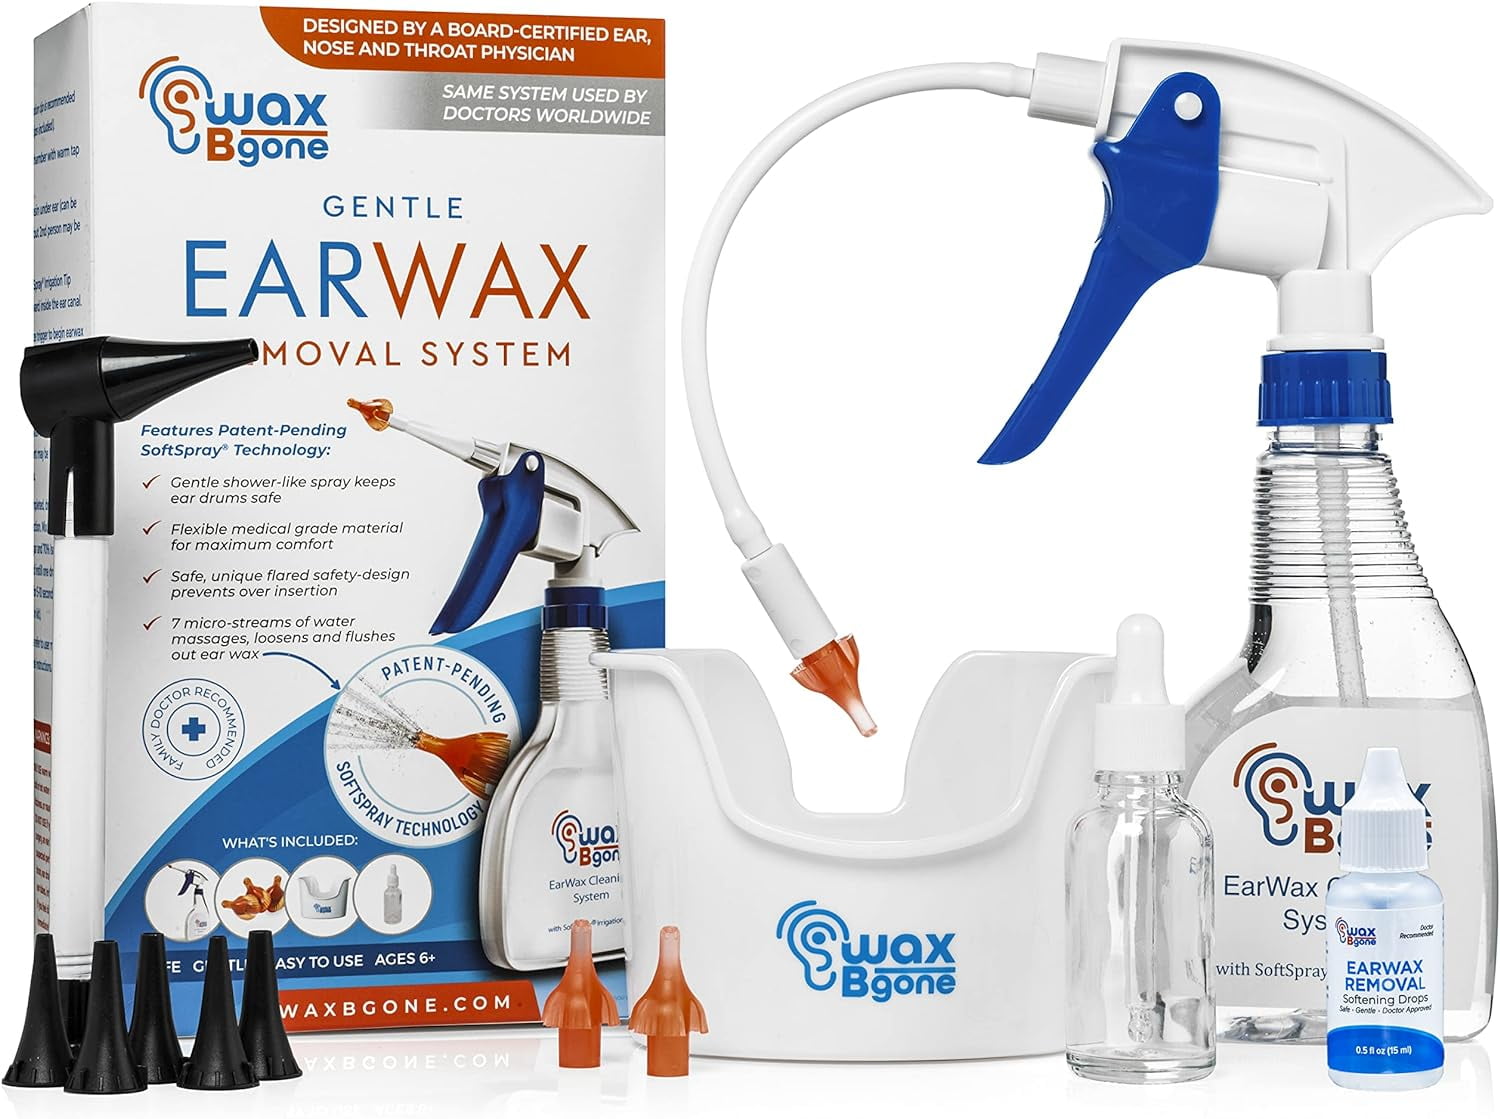 WaxRx Ear Wash System Ear Wax Removal Kit — Mountainside Medical Equipment